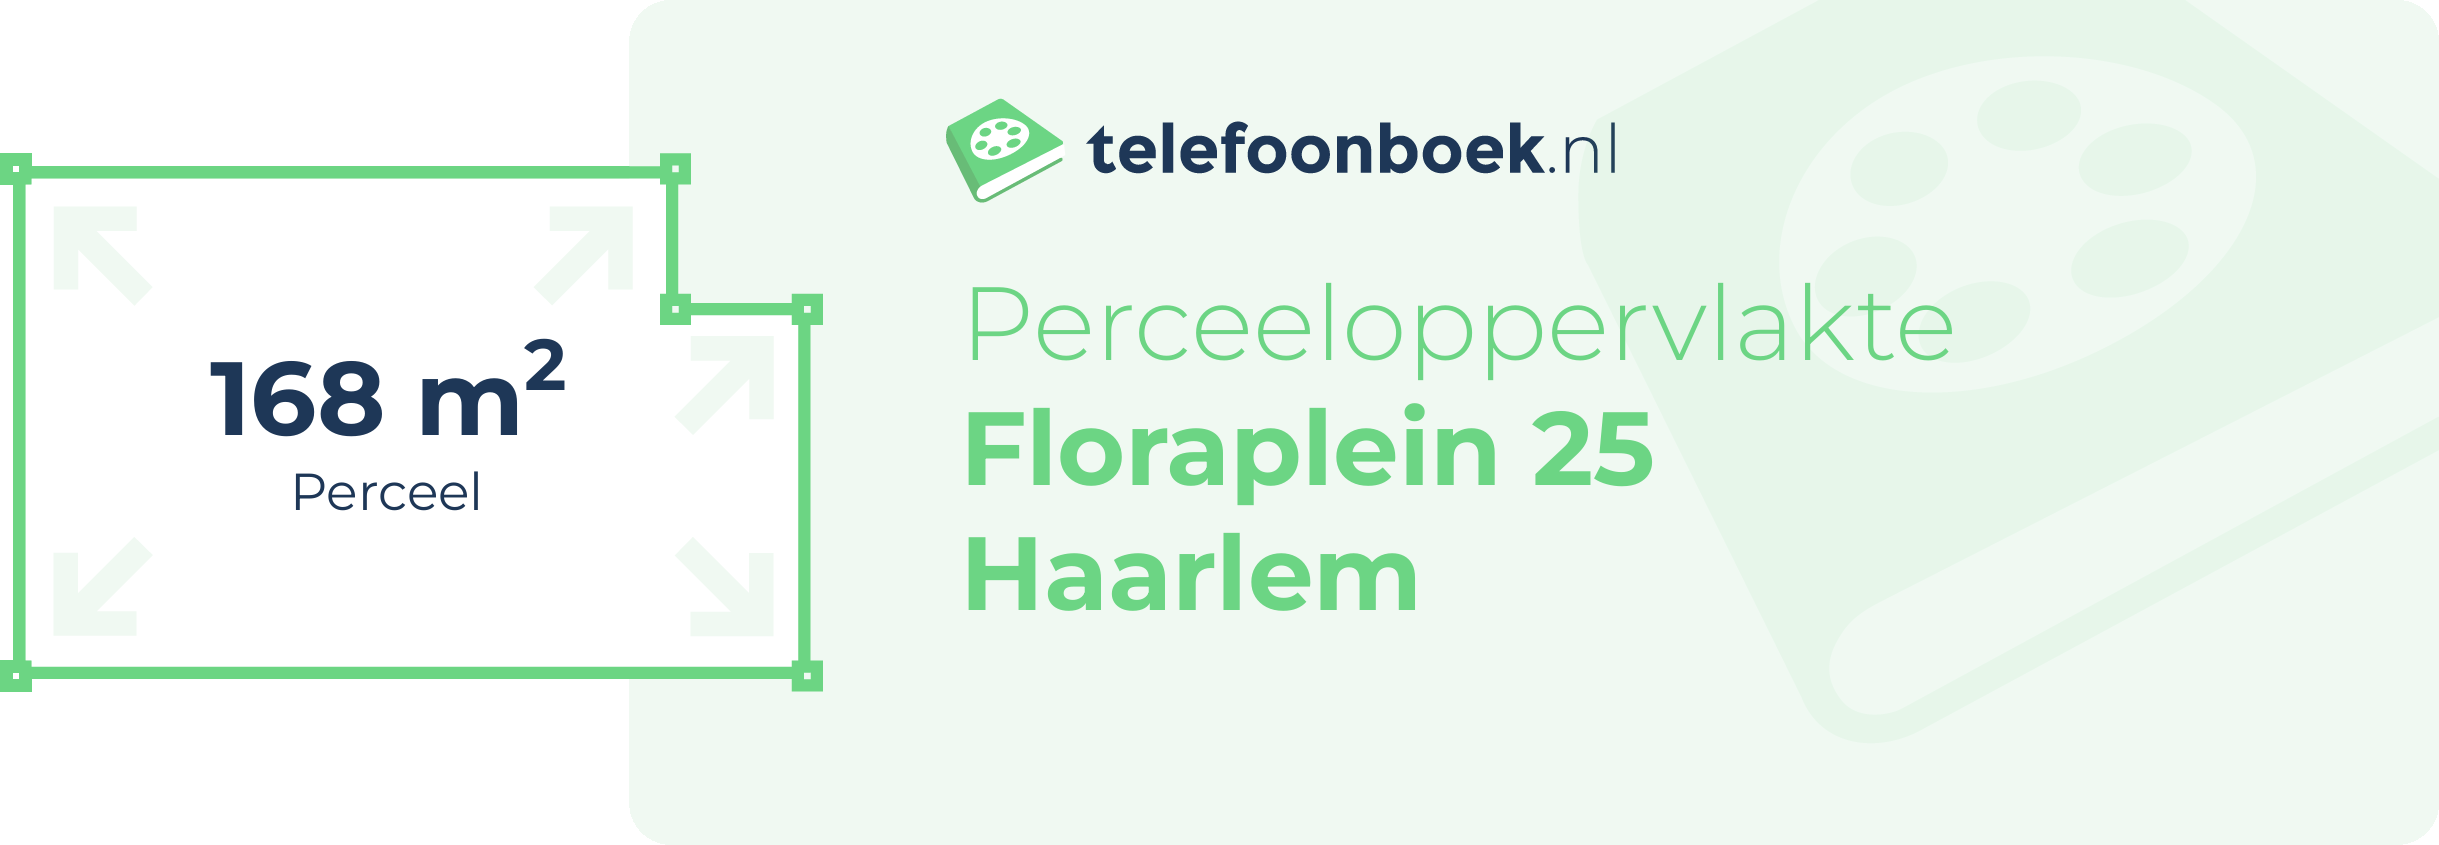 Perceeloppervlakte Floraplein 25 Haarlem